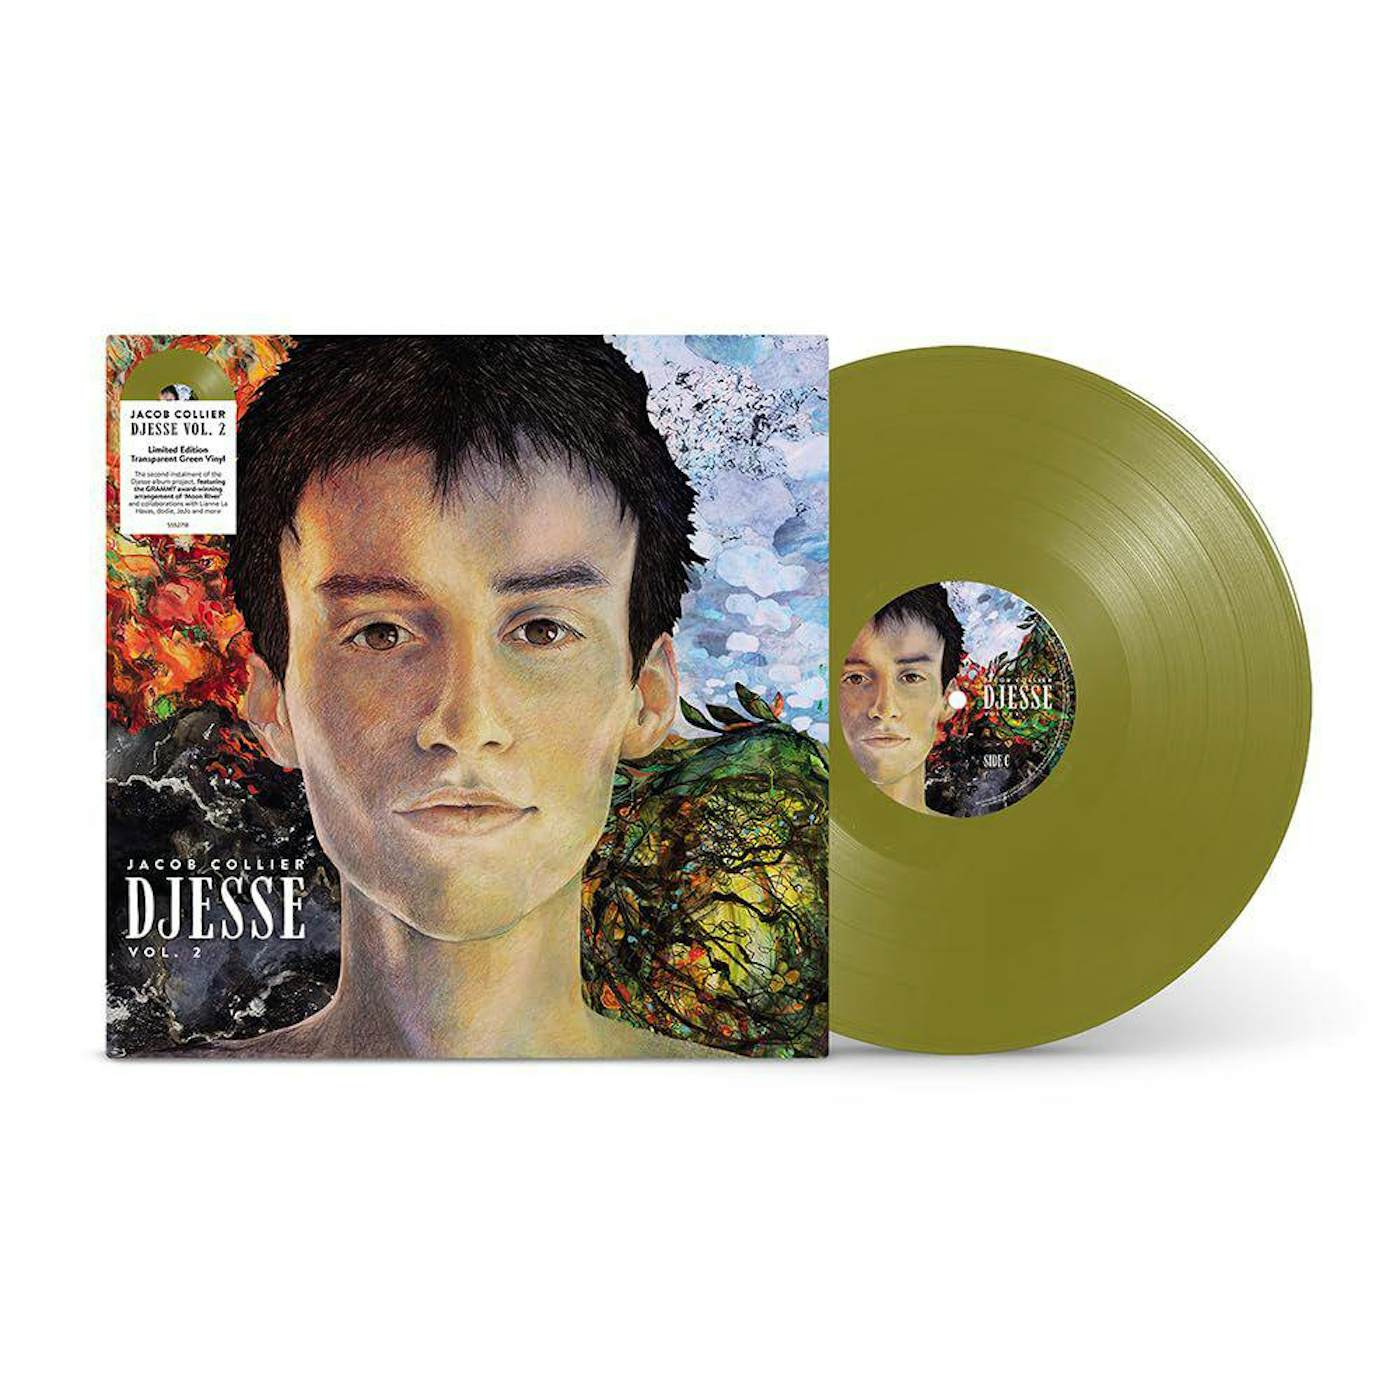 Jacob Collier Djesse Vol 2 (Olive) Vinyl Record